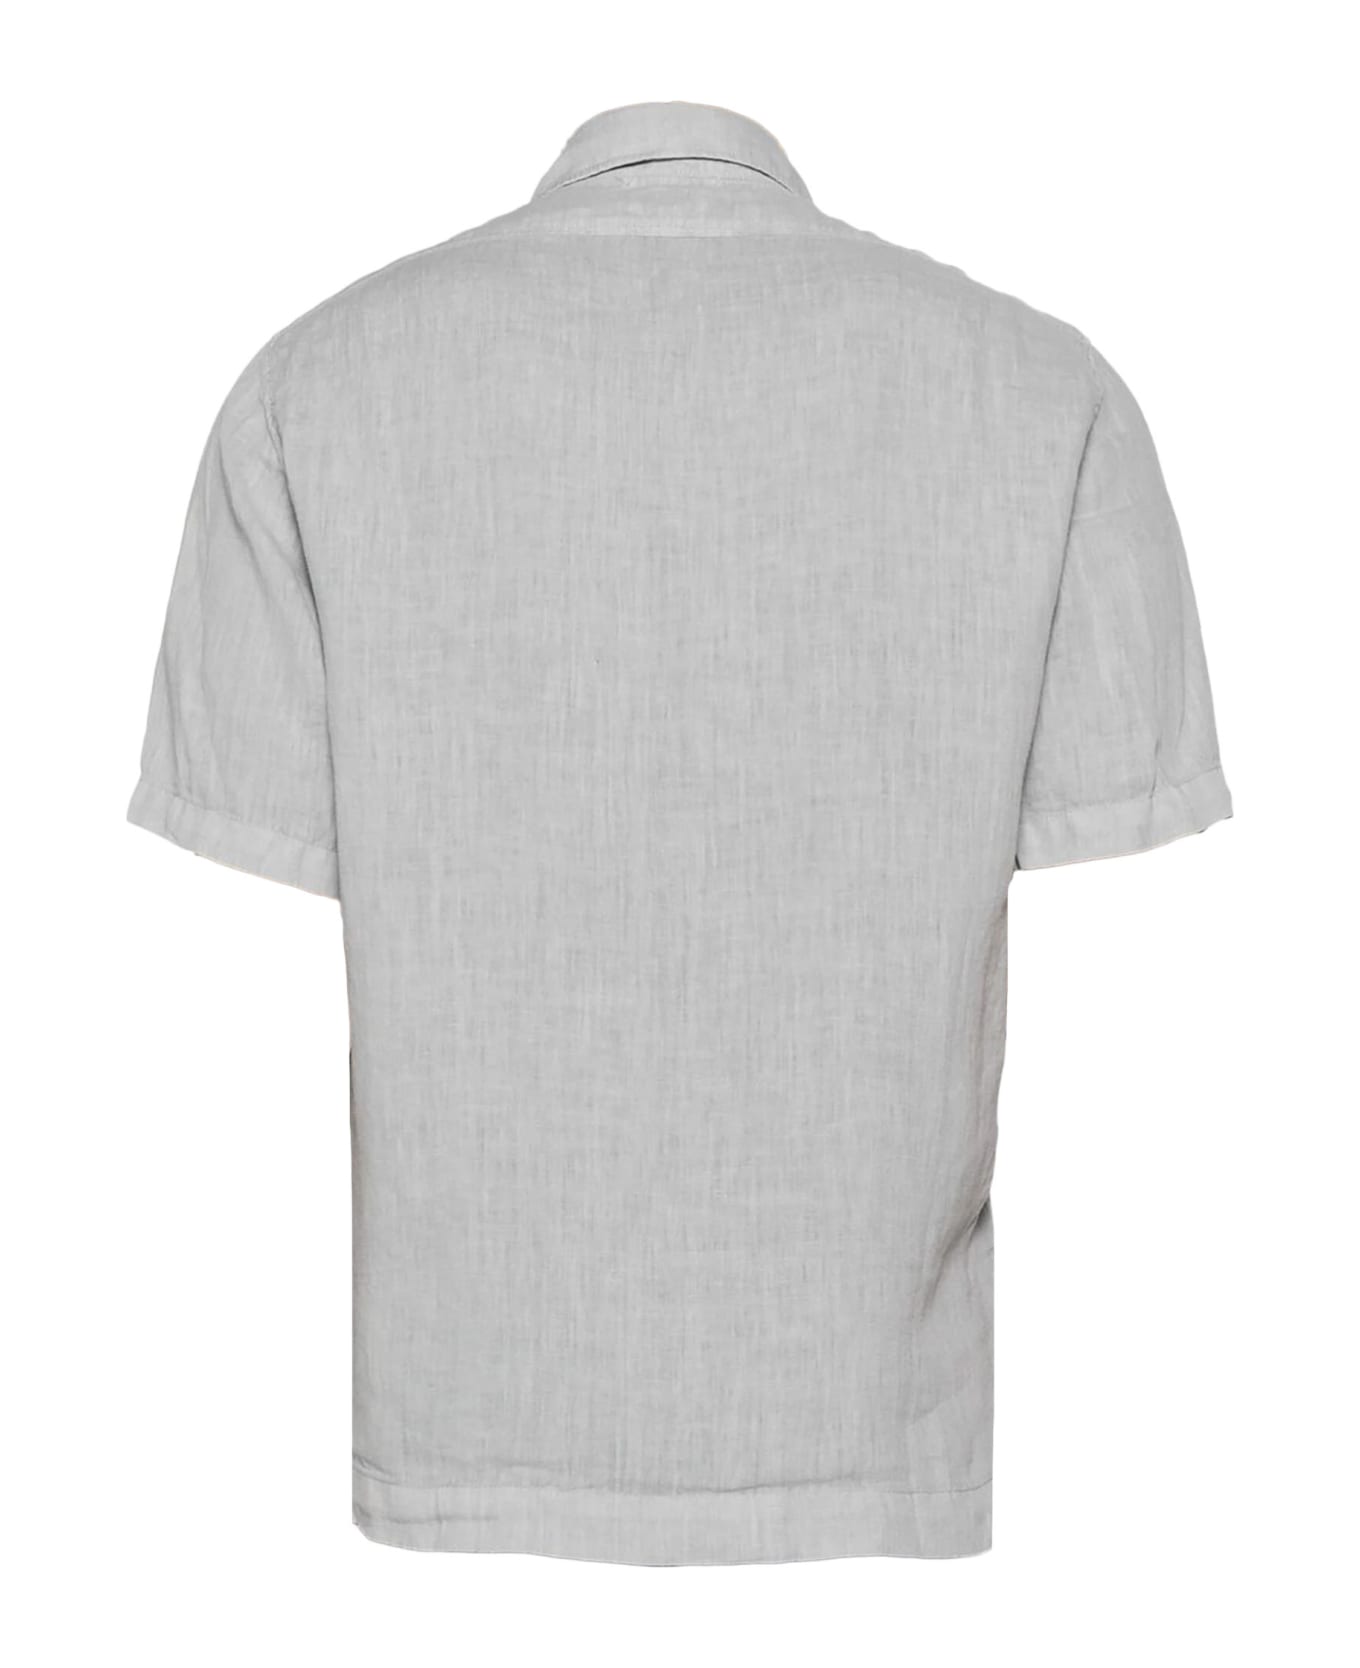 C.P. Company C.p.company Shirts Grey - Grey シャツ